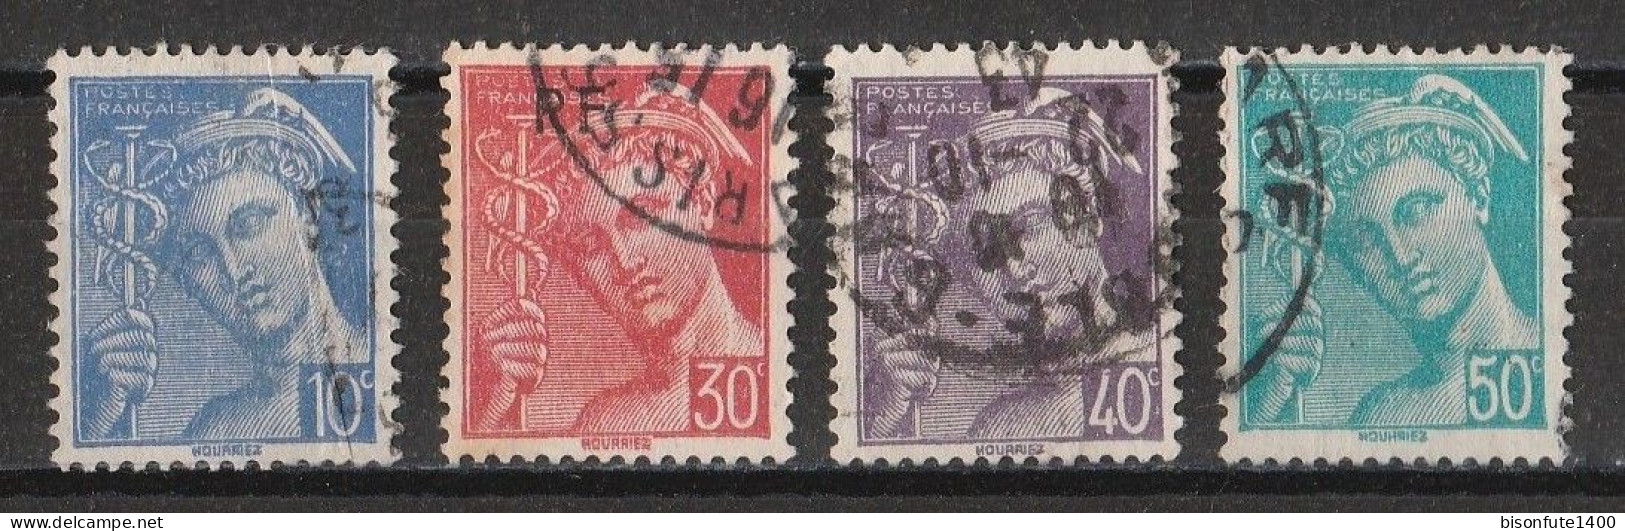 France 1942 : Timbres Yvert & Tellier N° 546 - 547 - 548 - 549 Et 552 Avec Oblitérations Rondes. - Gebraucht